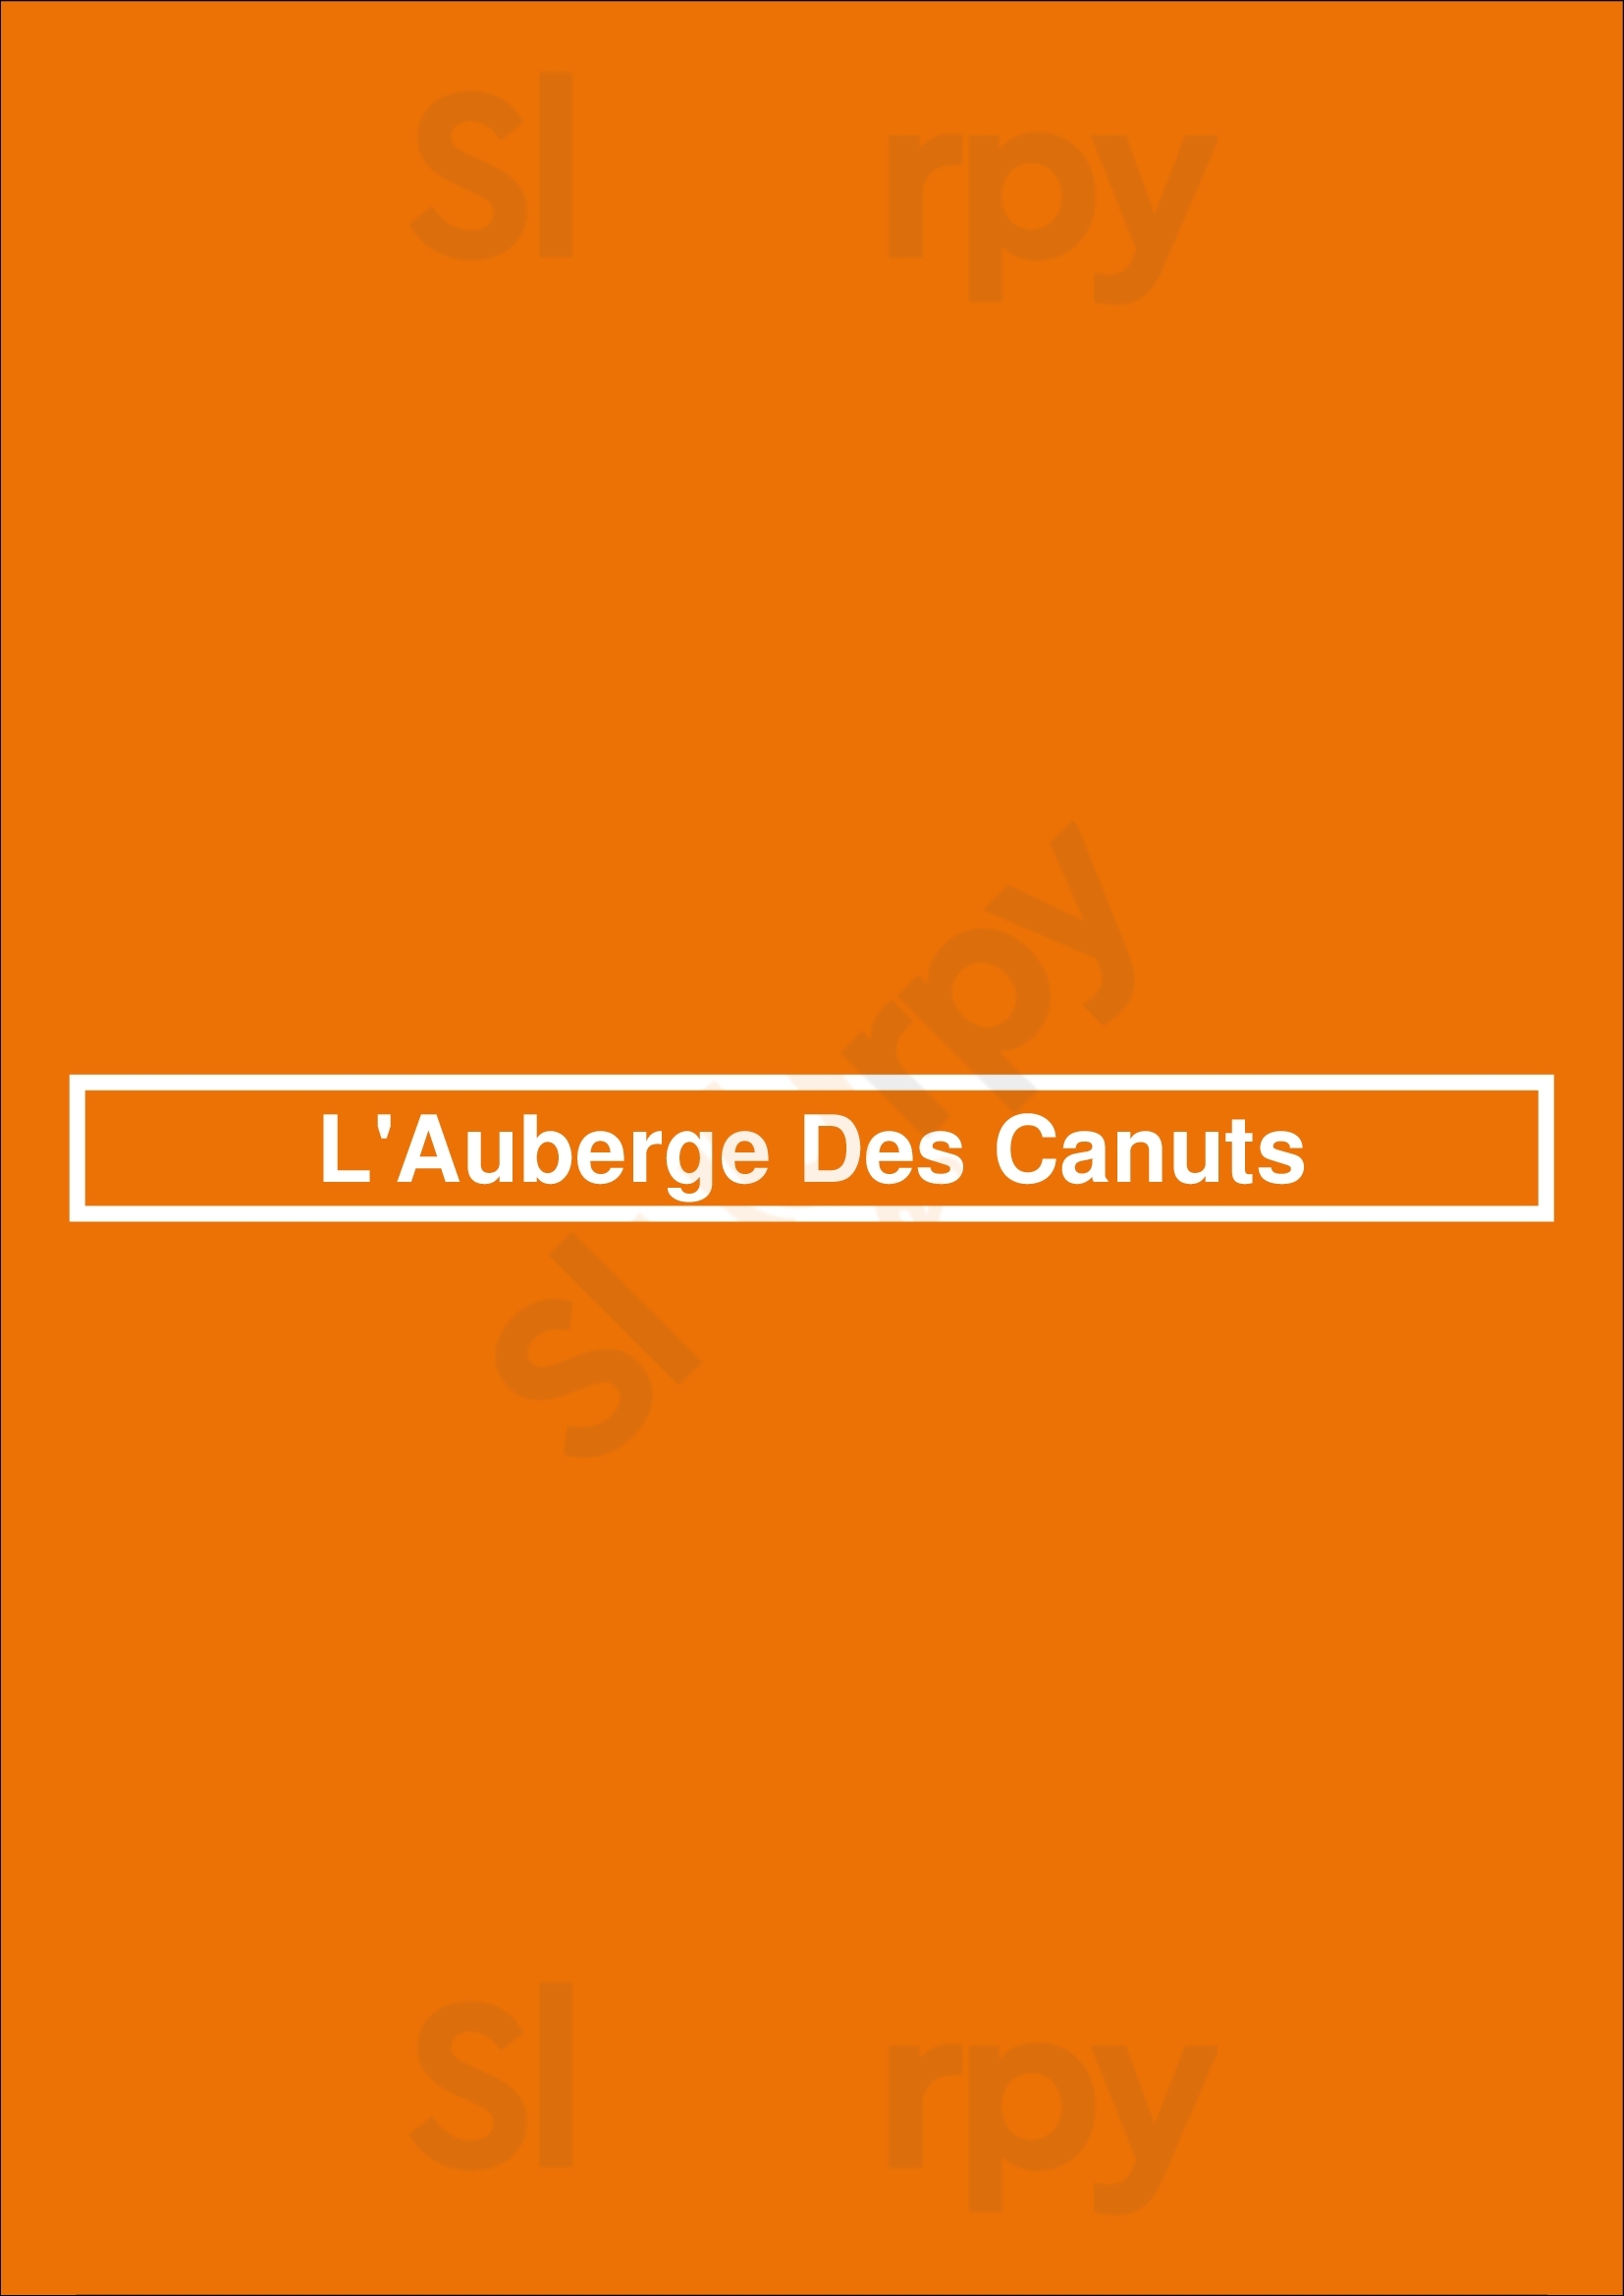 L'auberge Des Canuts Lyon Menu - 1